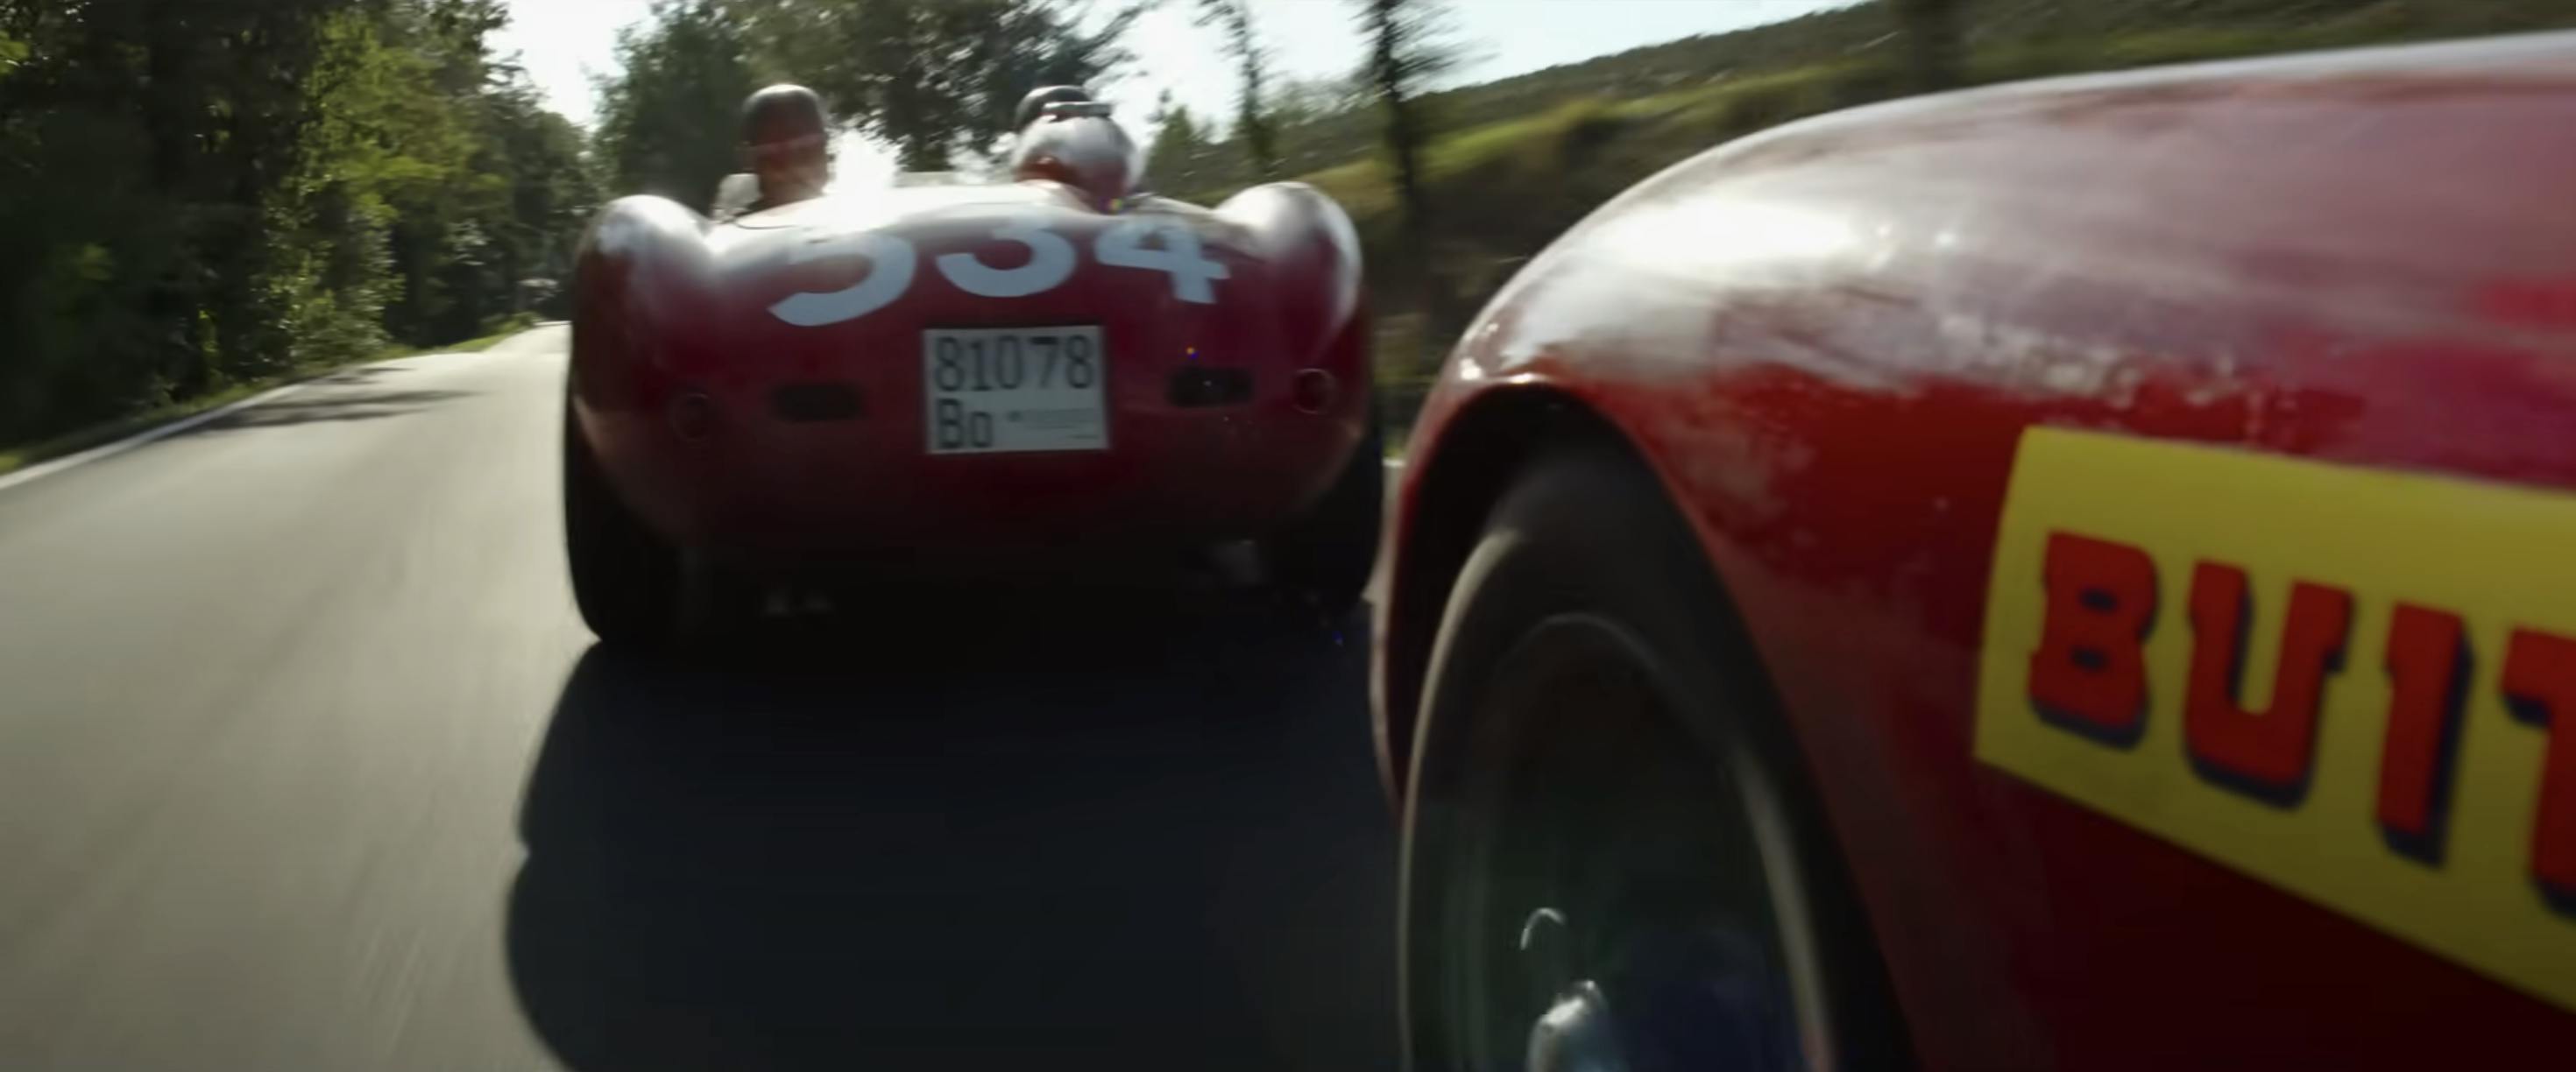 Ferrari film racing action still wheel to wheel